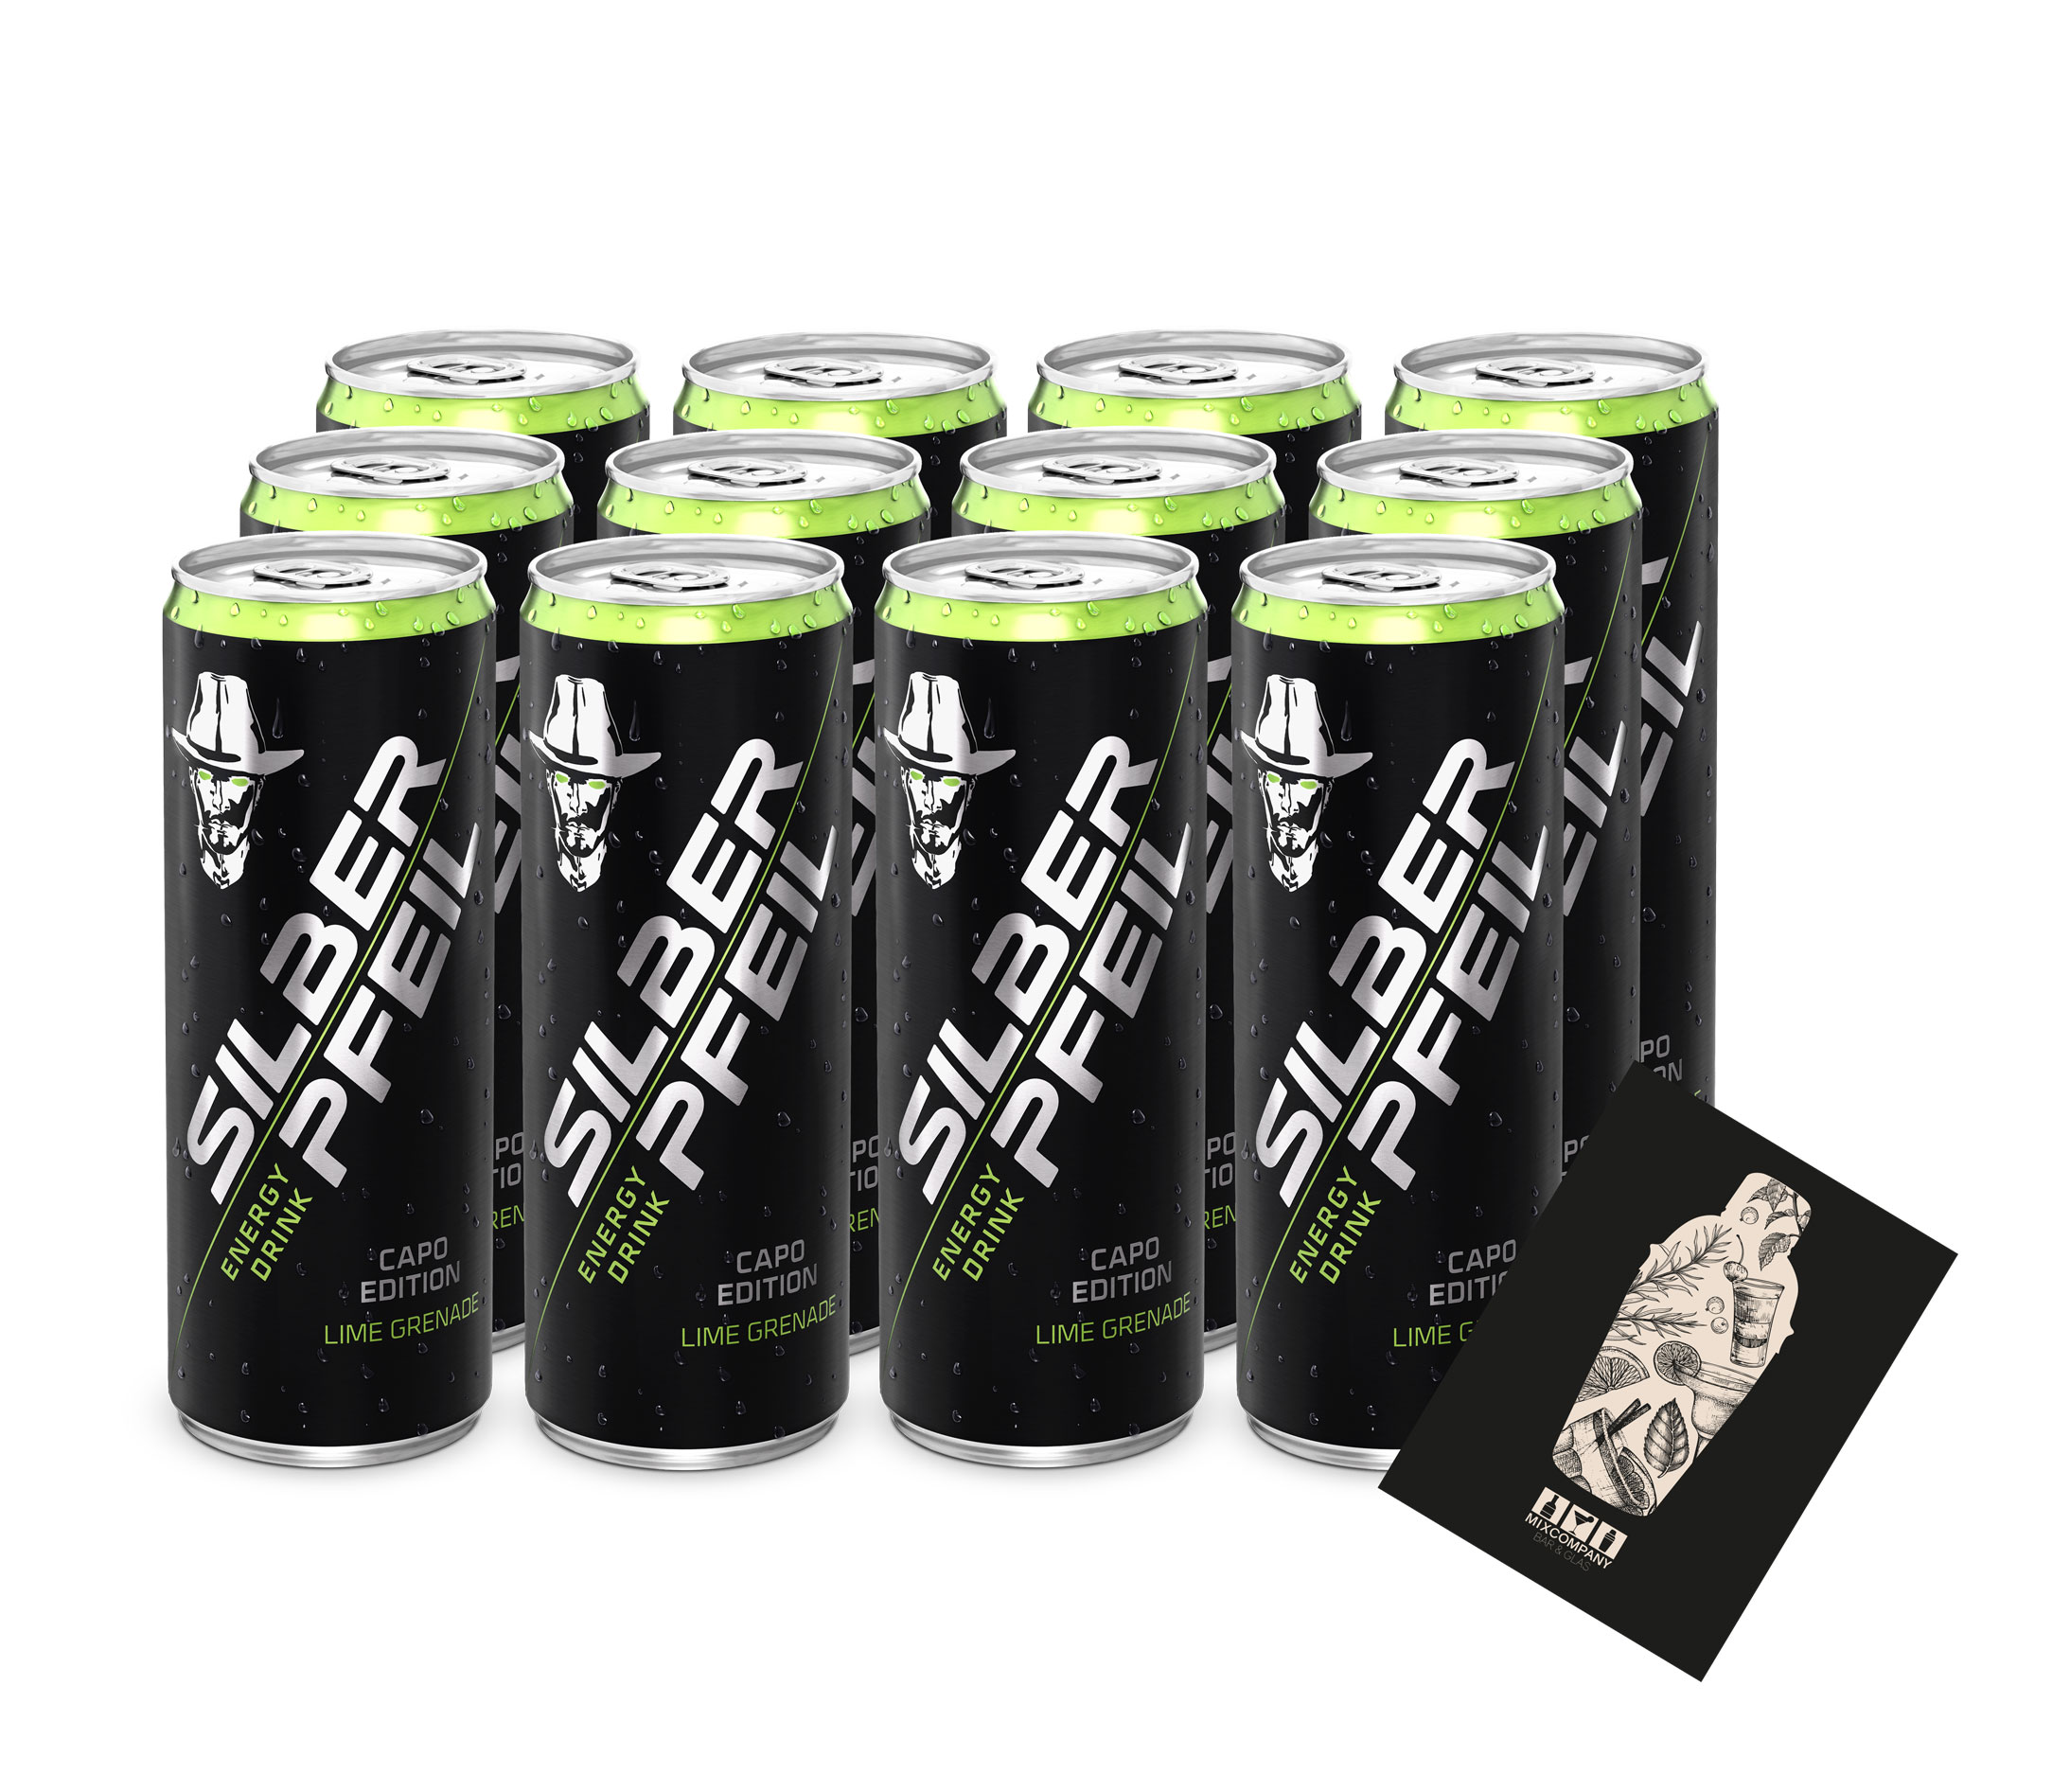 Silberpfeil Capo Edition 12er Set Energy Drink Lime Grenade 12x 0,25L inkl. Pfand EINWEG